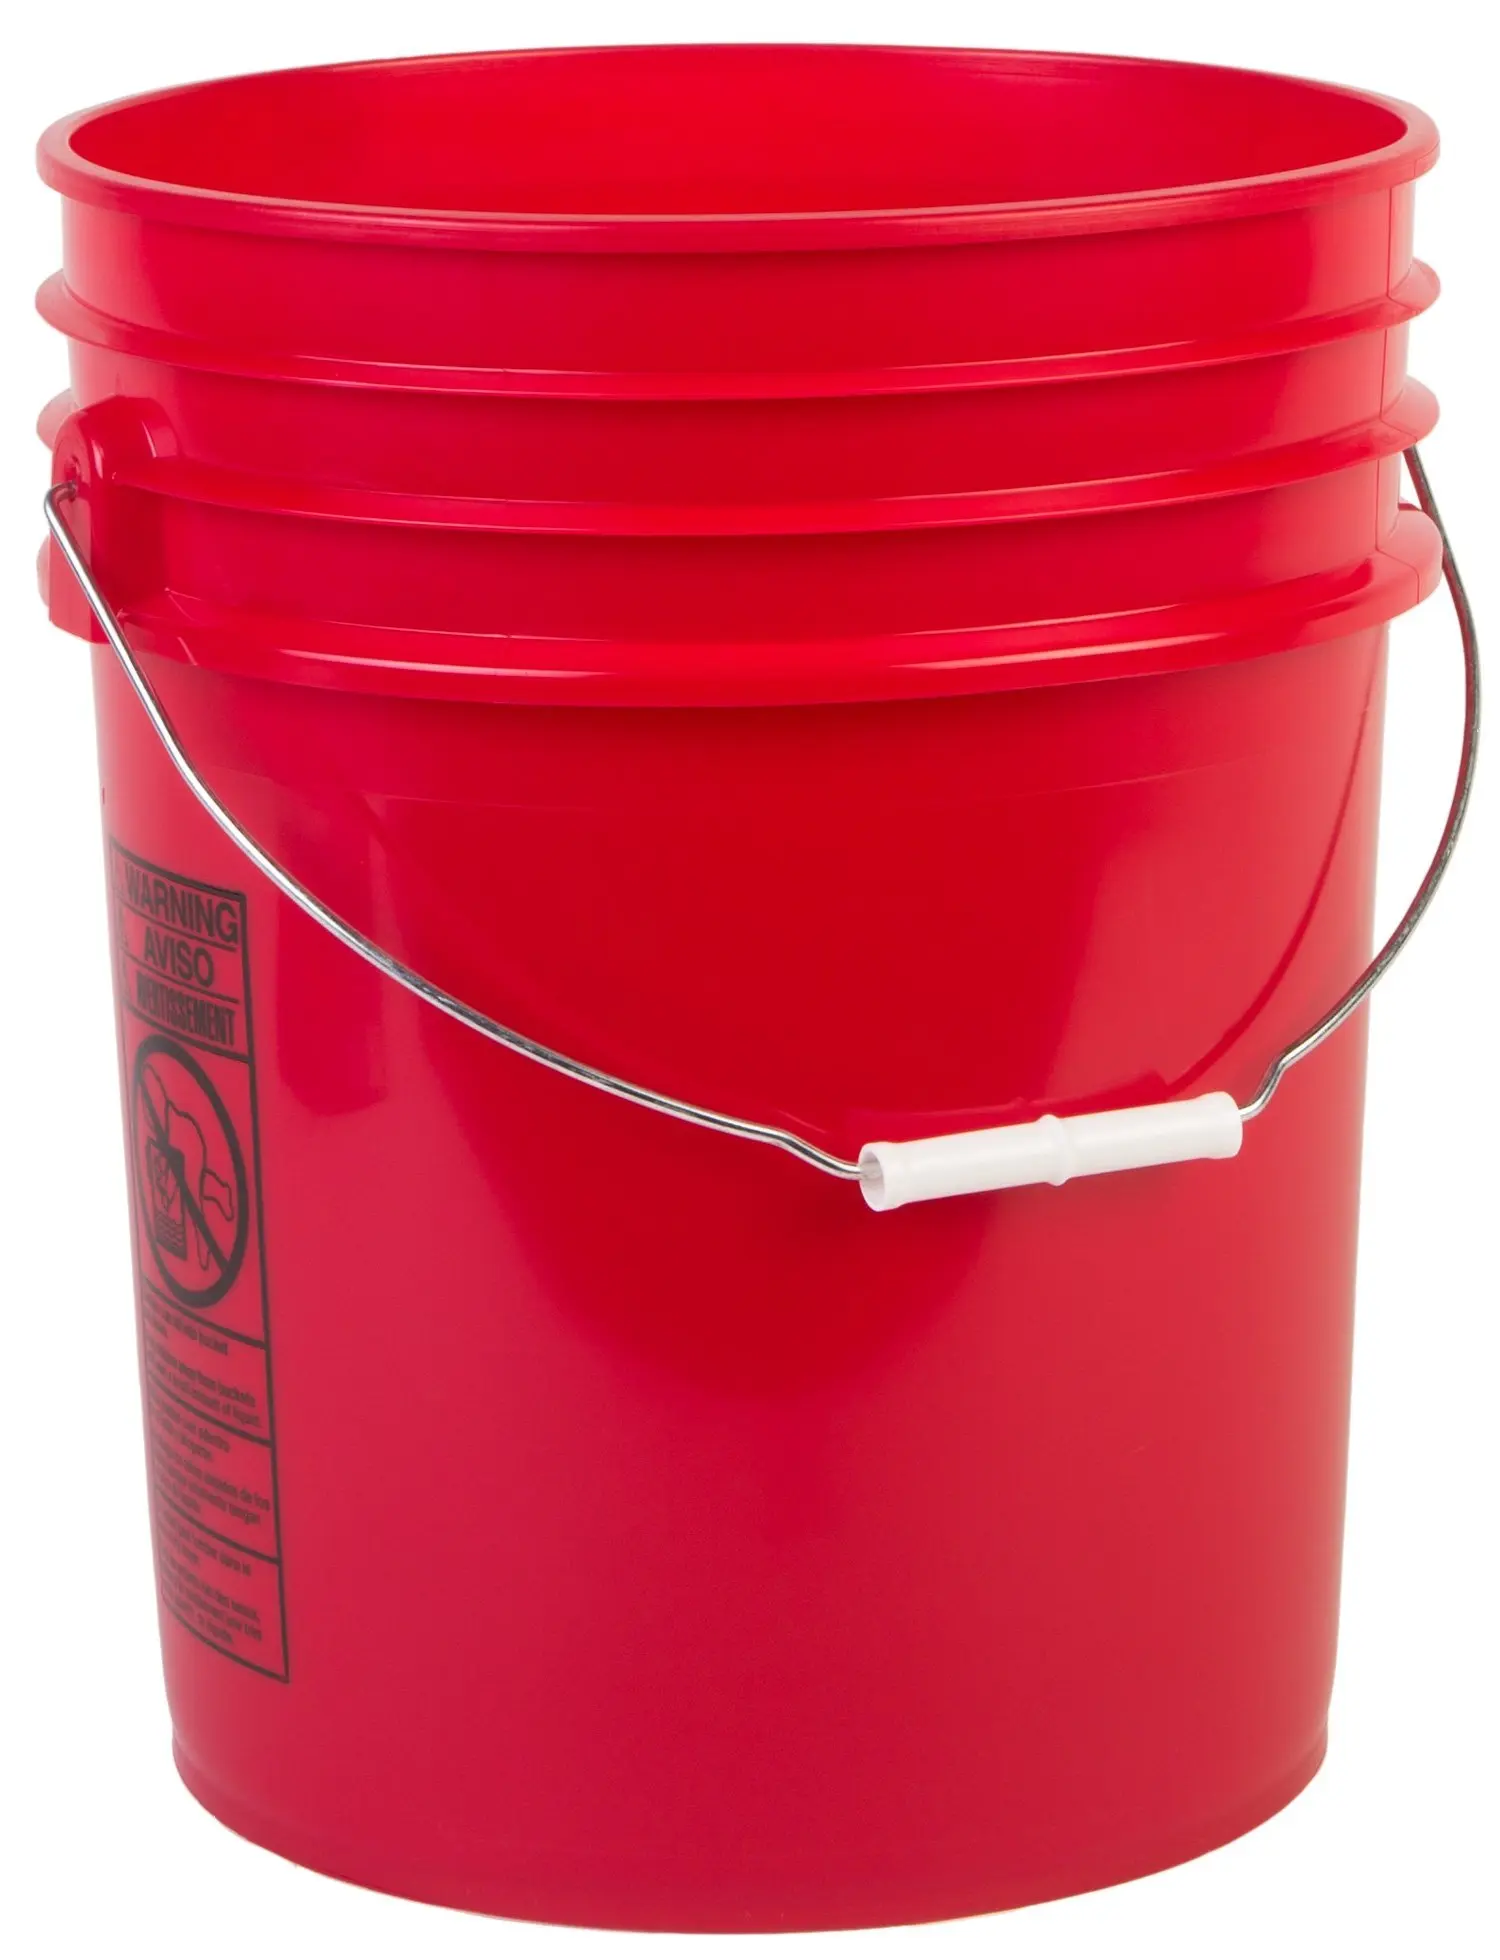 43.5. Hudson Exchange Premium 5 Gallon Bucket, HDPE, Red, 3 Pack. 